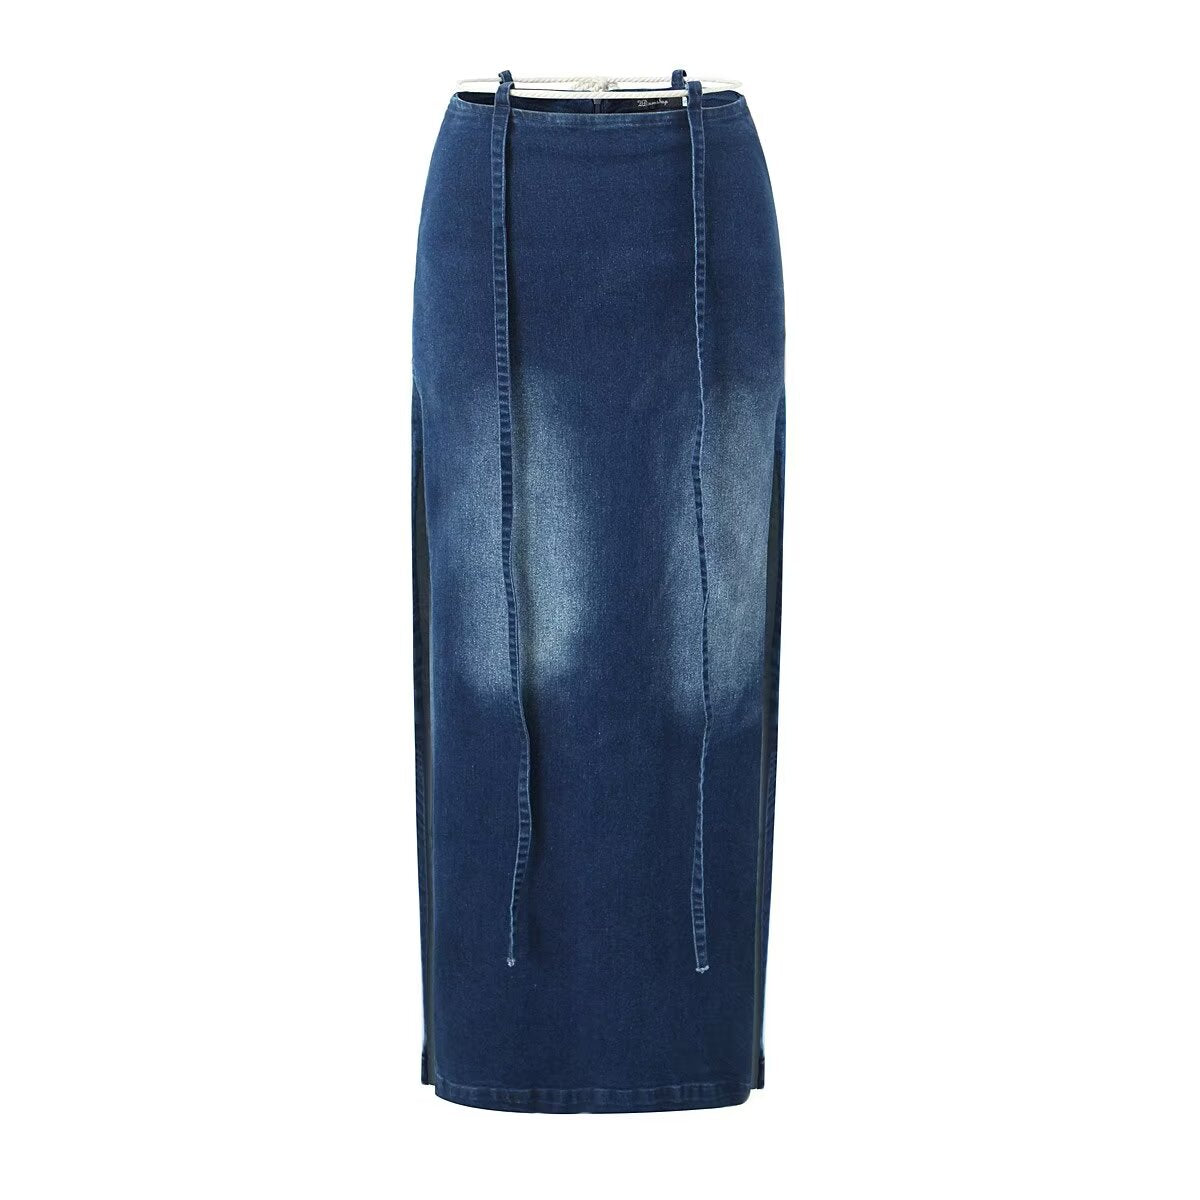 Skirt Women Spring Split Long Denim Skirt Retro Washed Color Distressed Trendy Ribbon A line Skirt